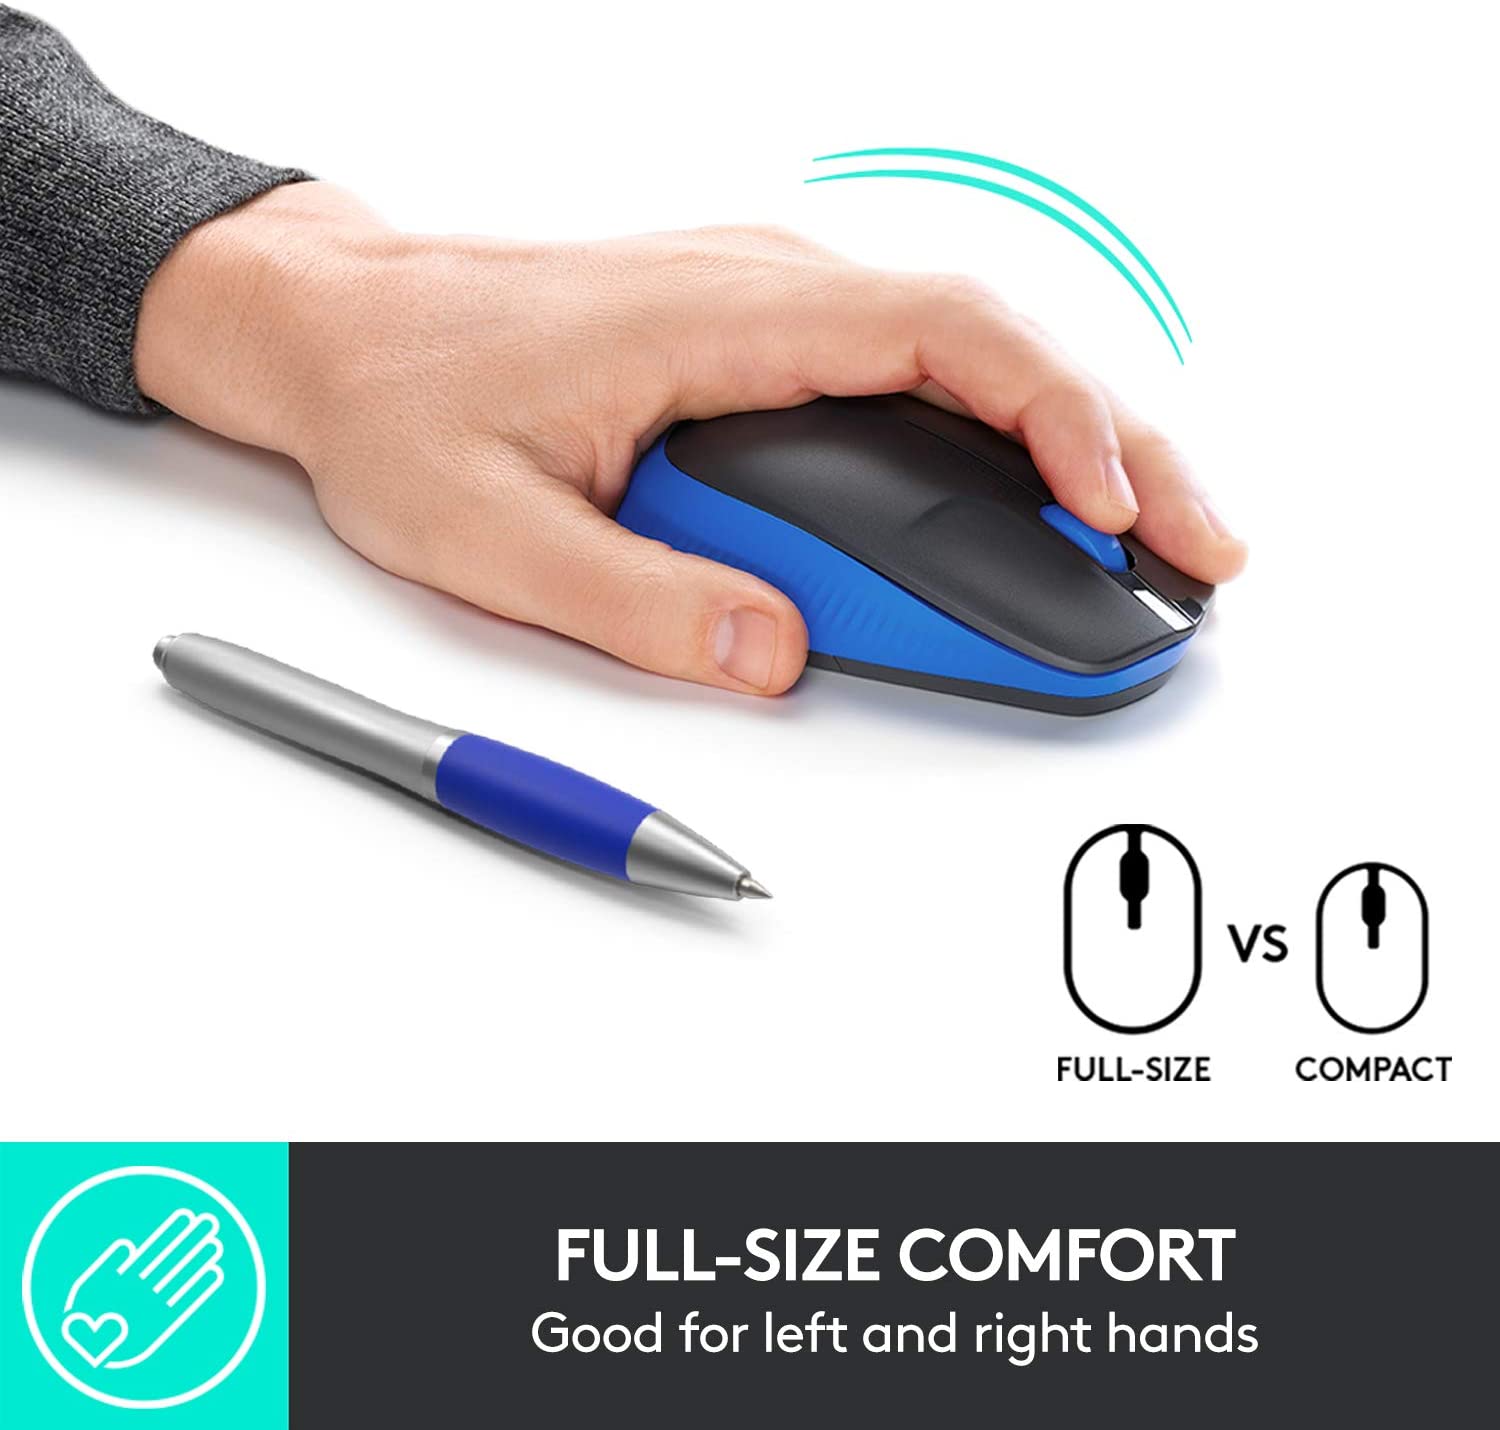 Logitech Mouse M190 Wireless Mouse Full Size Comfort Curve Design